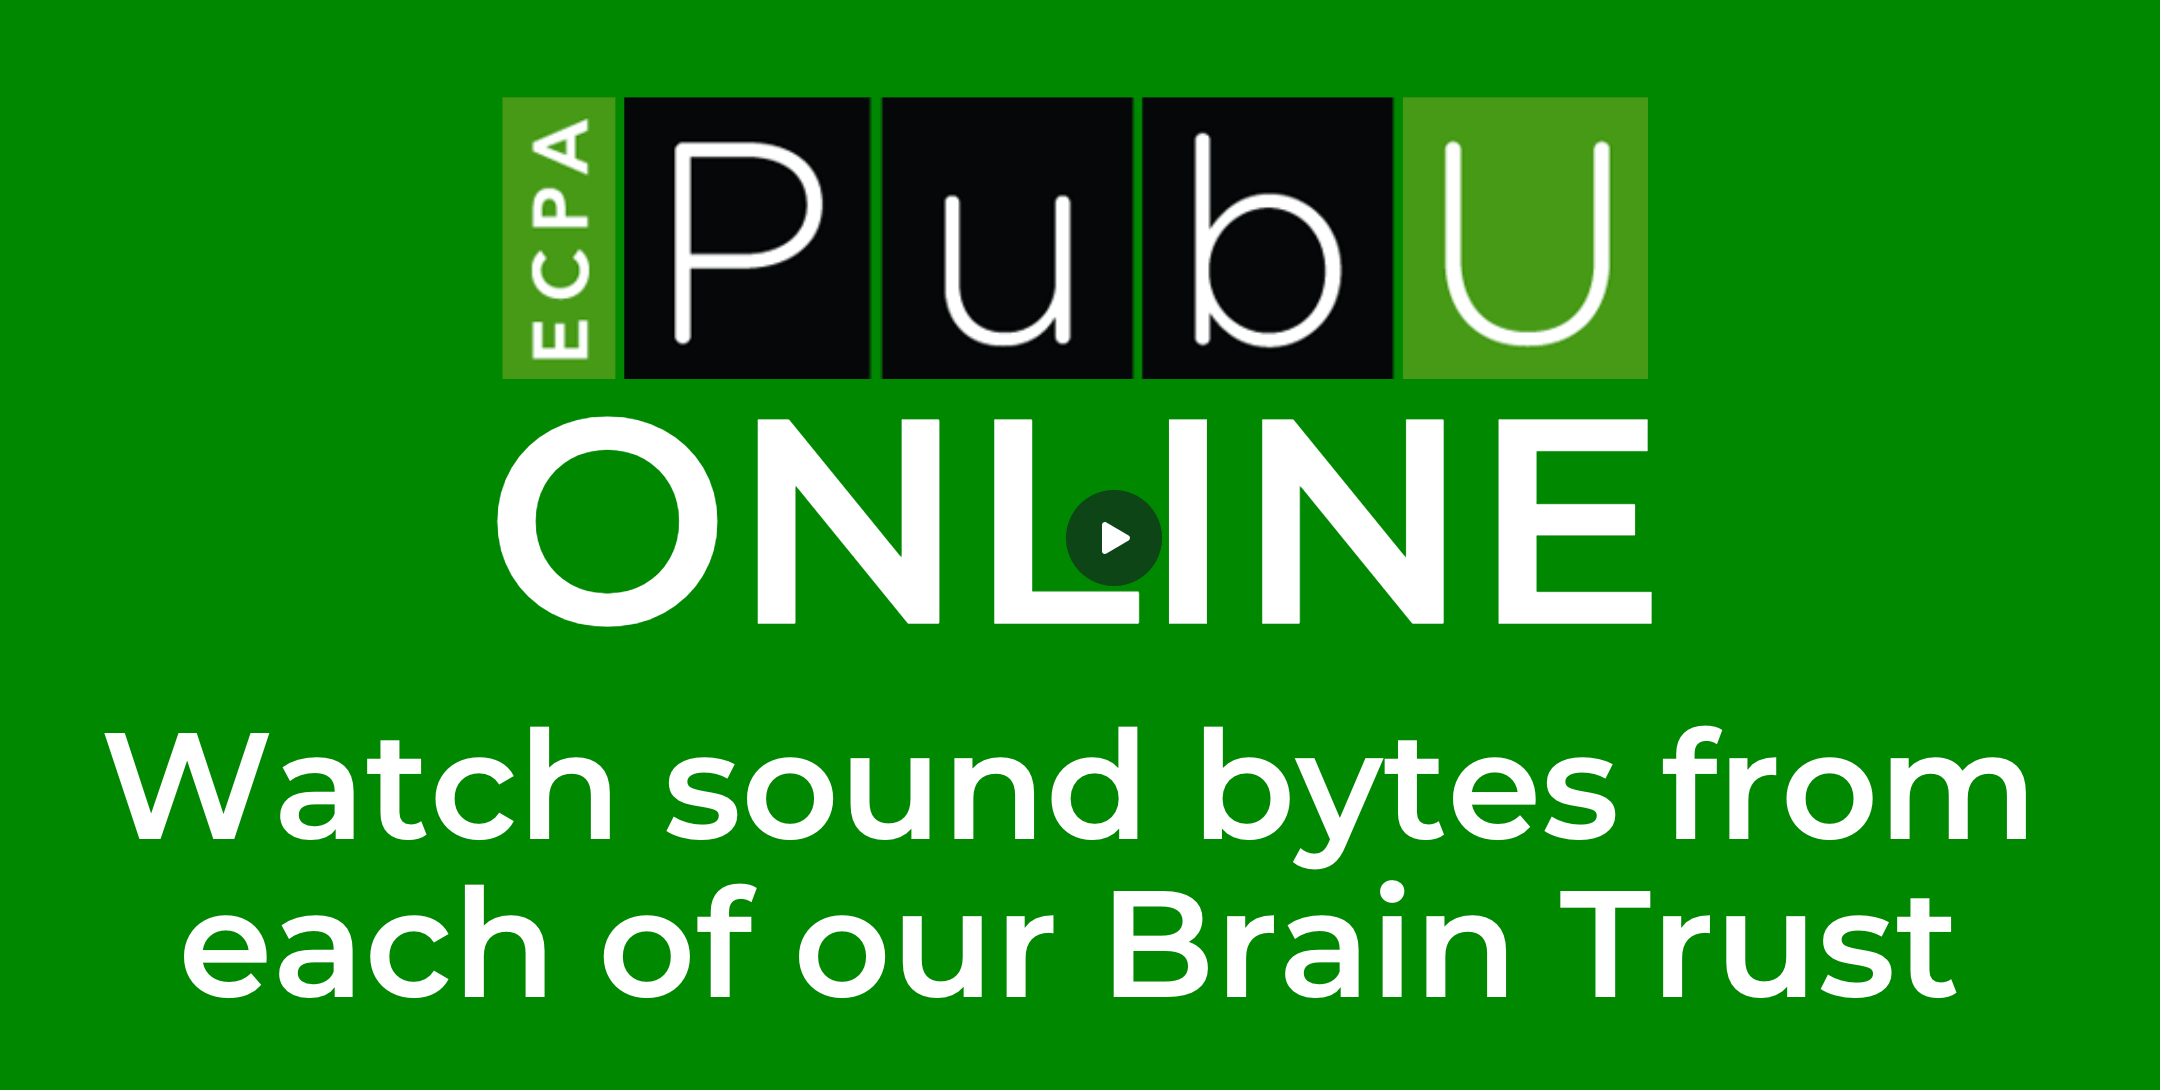 ECPA PubU: Watch sound bytes from each of our Brain Trust